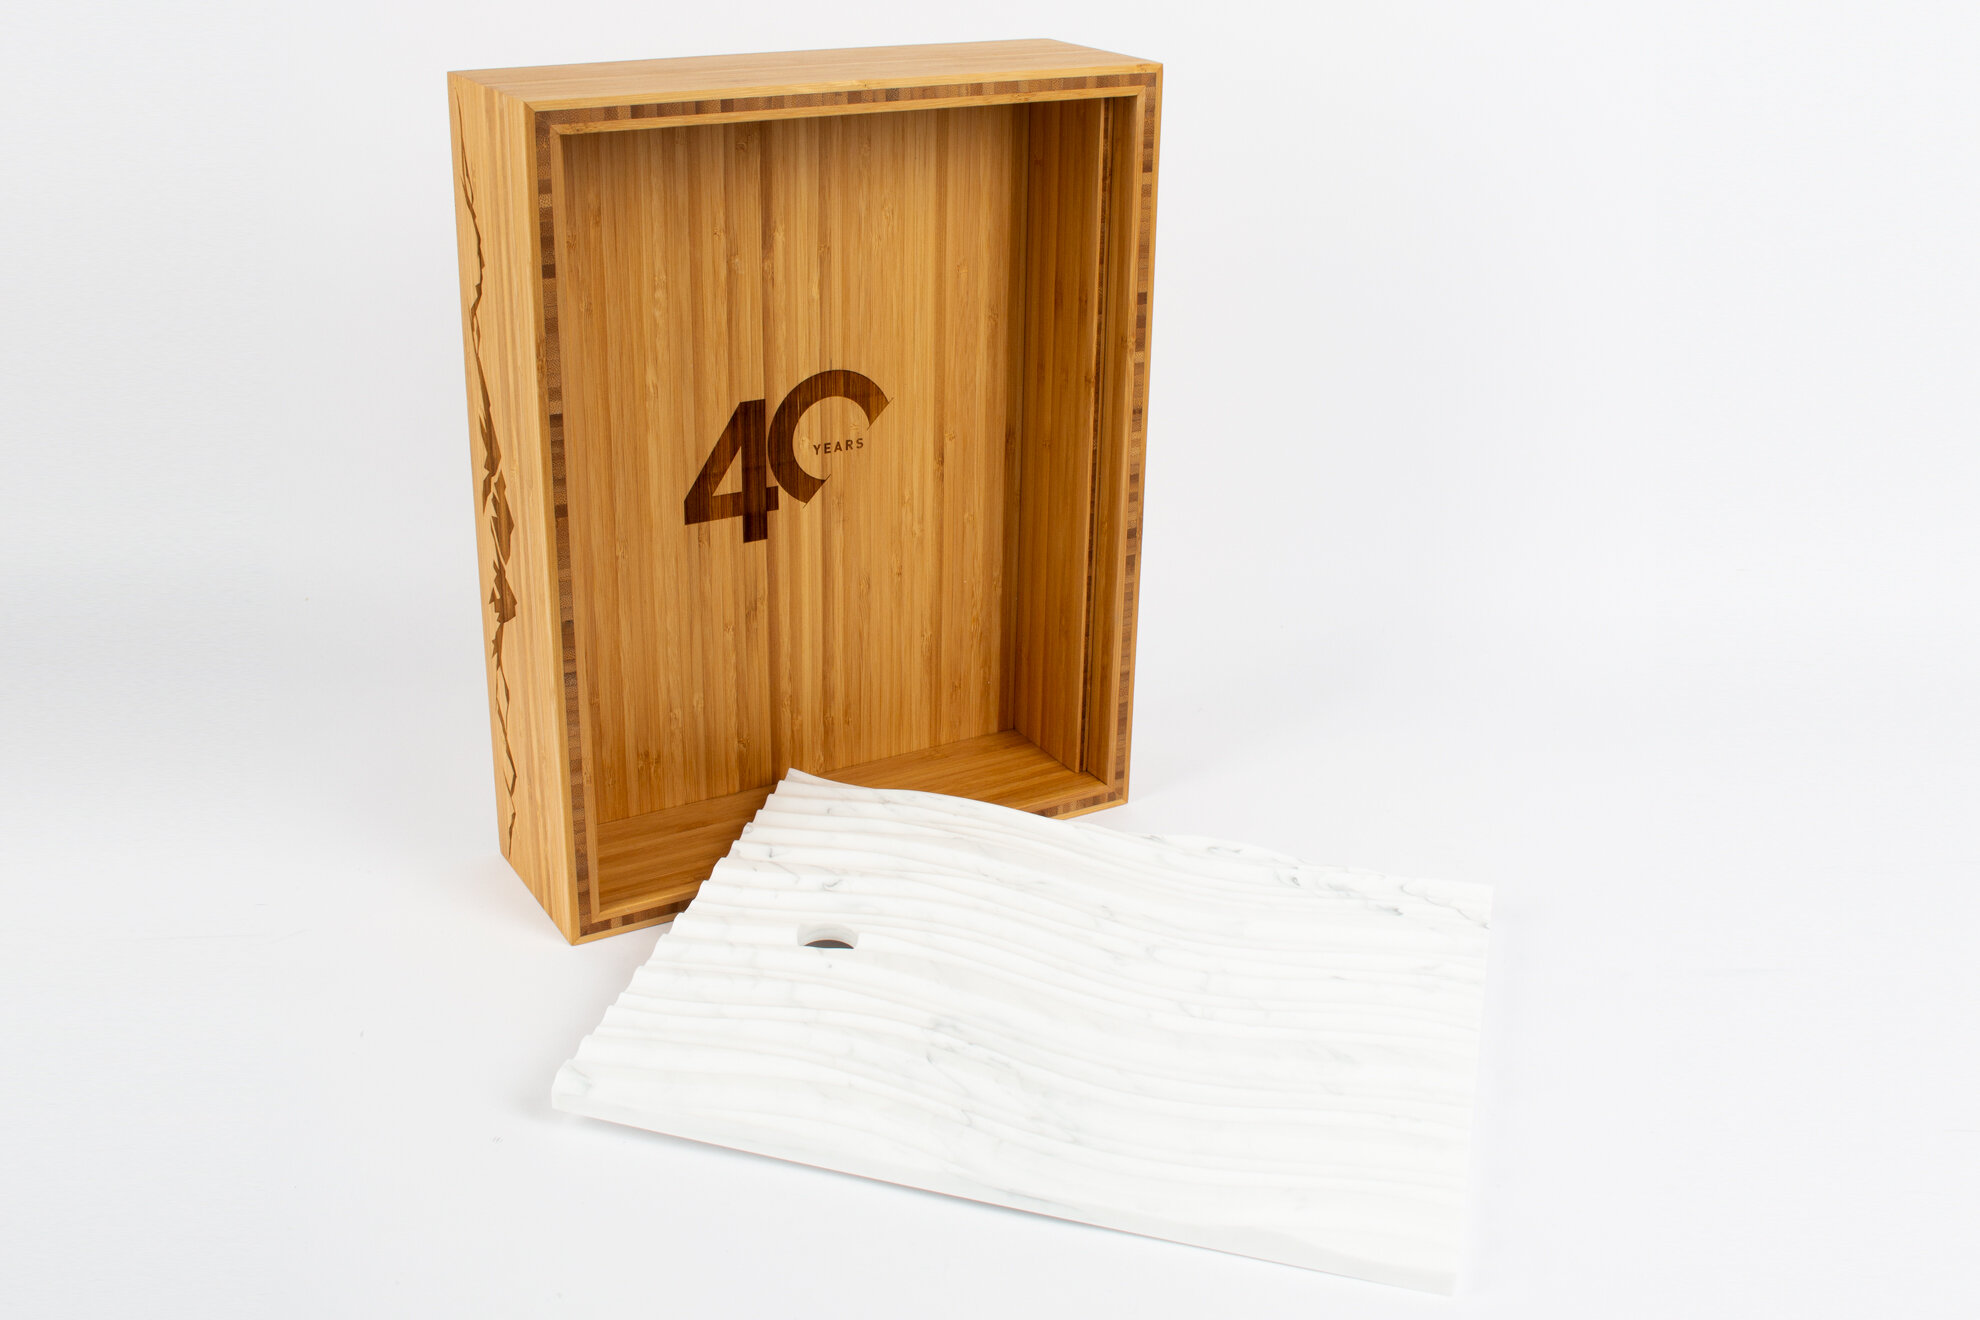 40th-anniversary-custom-wooden-box-plaque-9